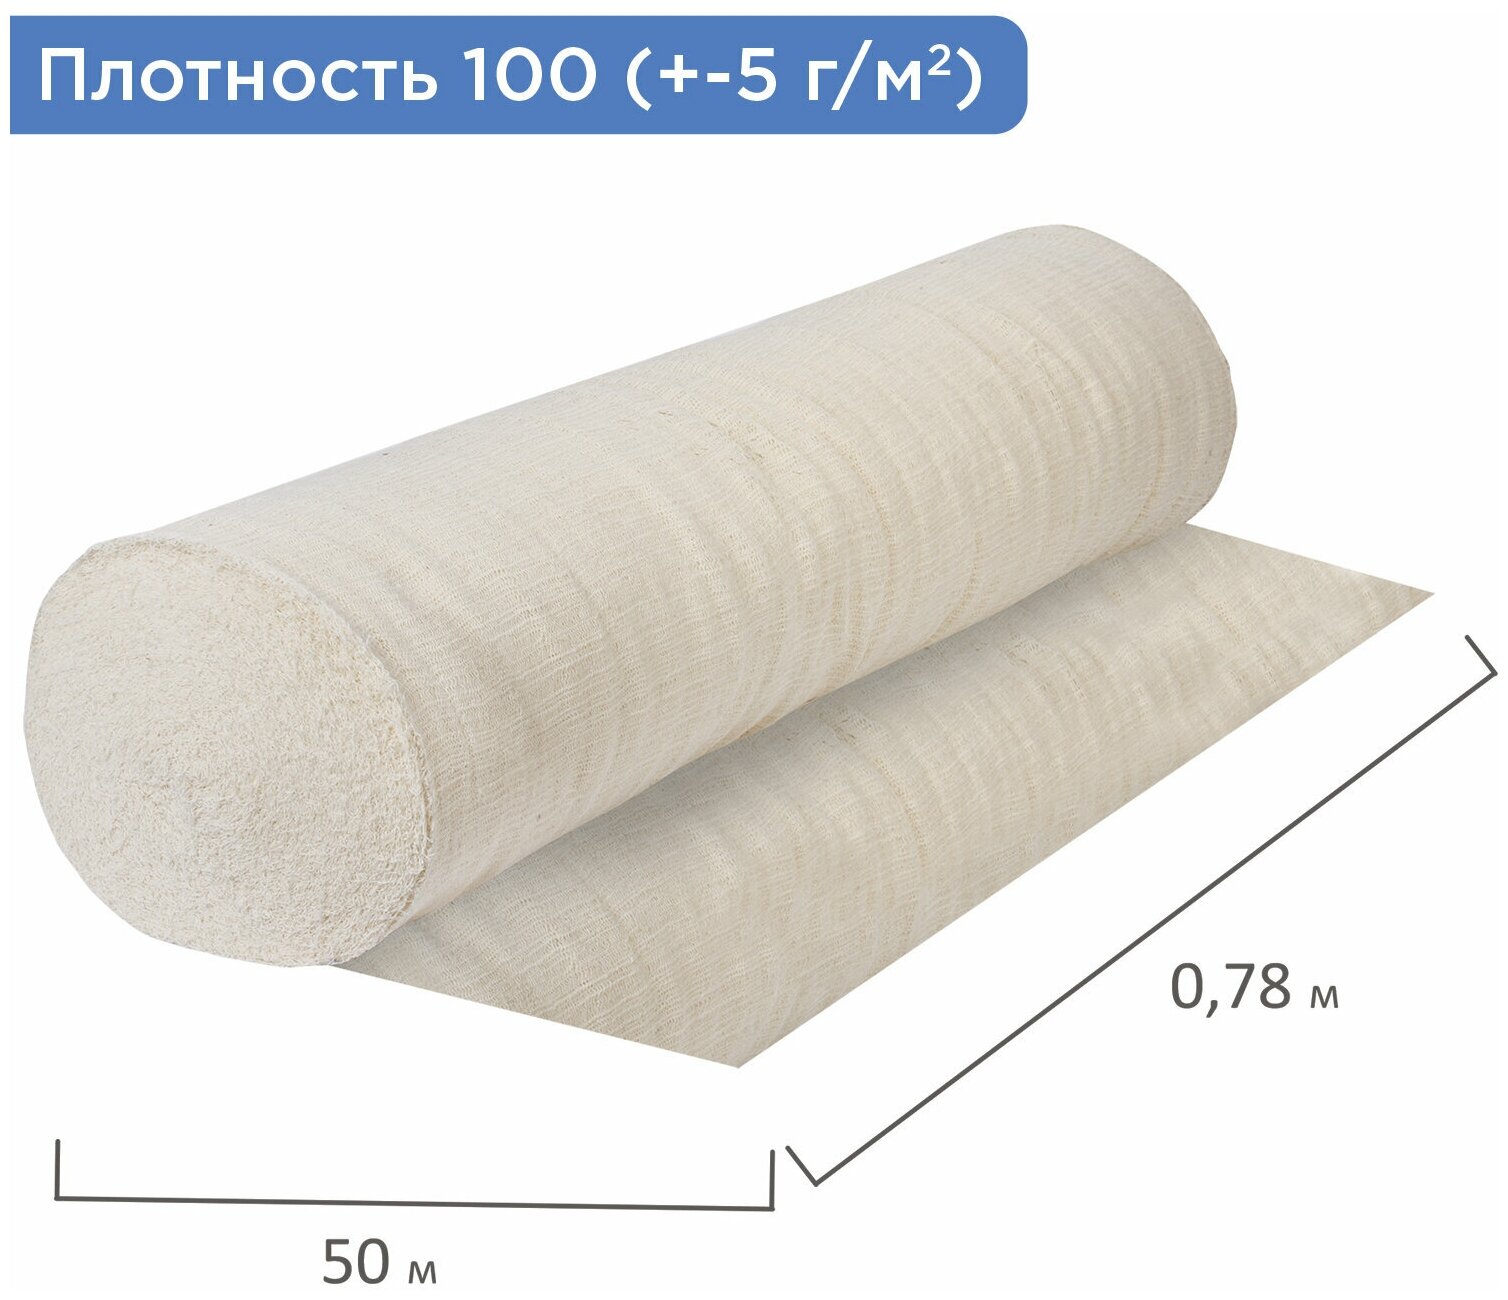 Полотно неткол, Узбекистан, рулон 0,75×50 м, плотность 100 (±5) г/ м 2 , в пакете, LAIMA, 600931